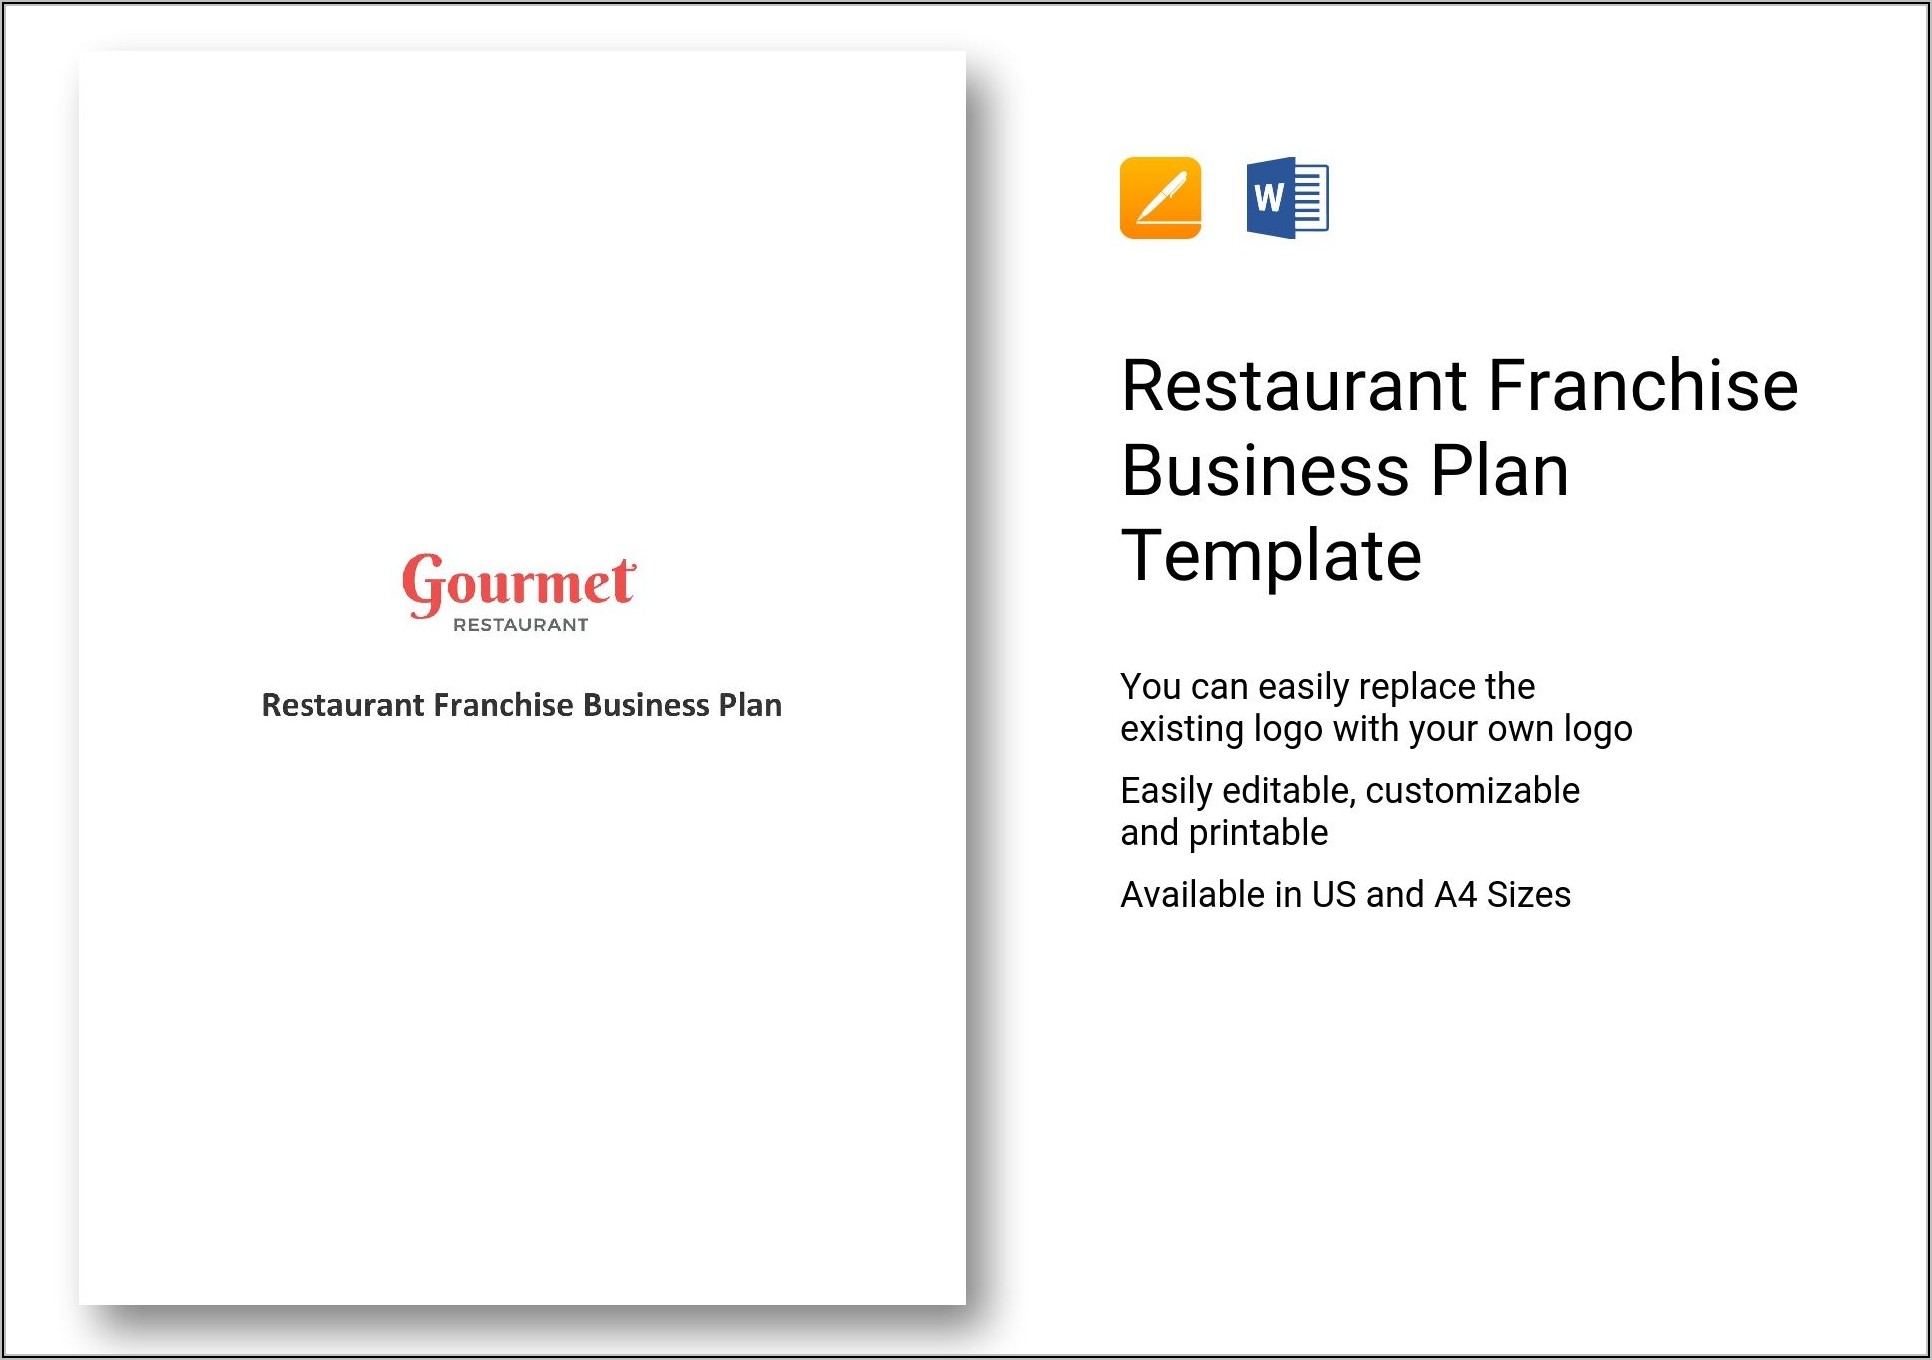 Franchise Restaurant Business Plan Template